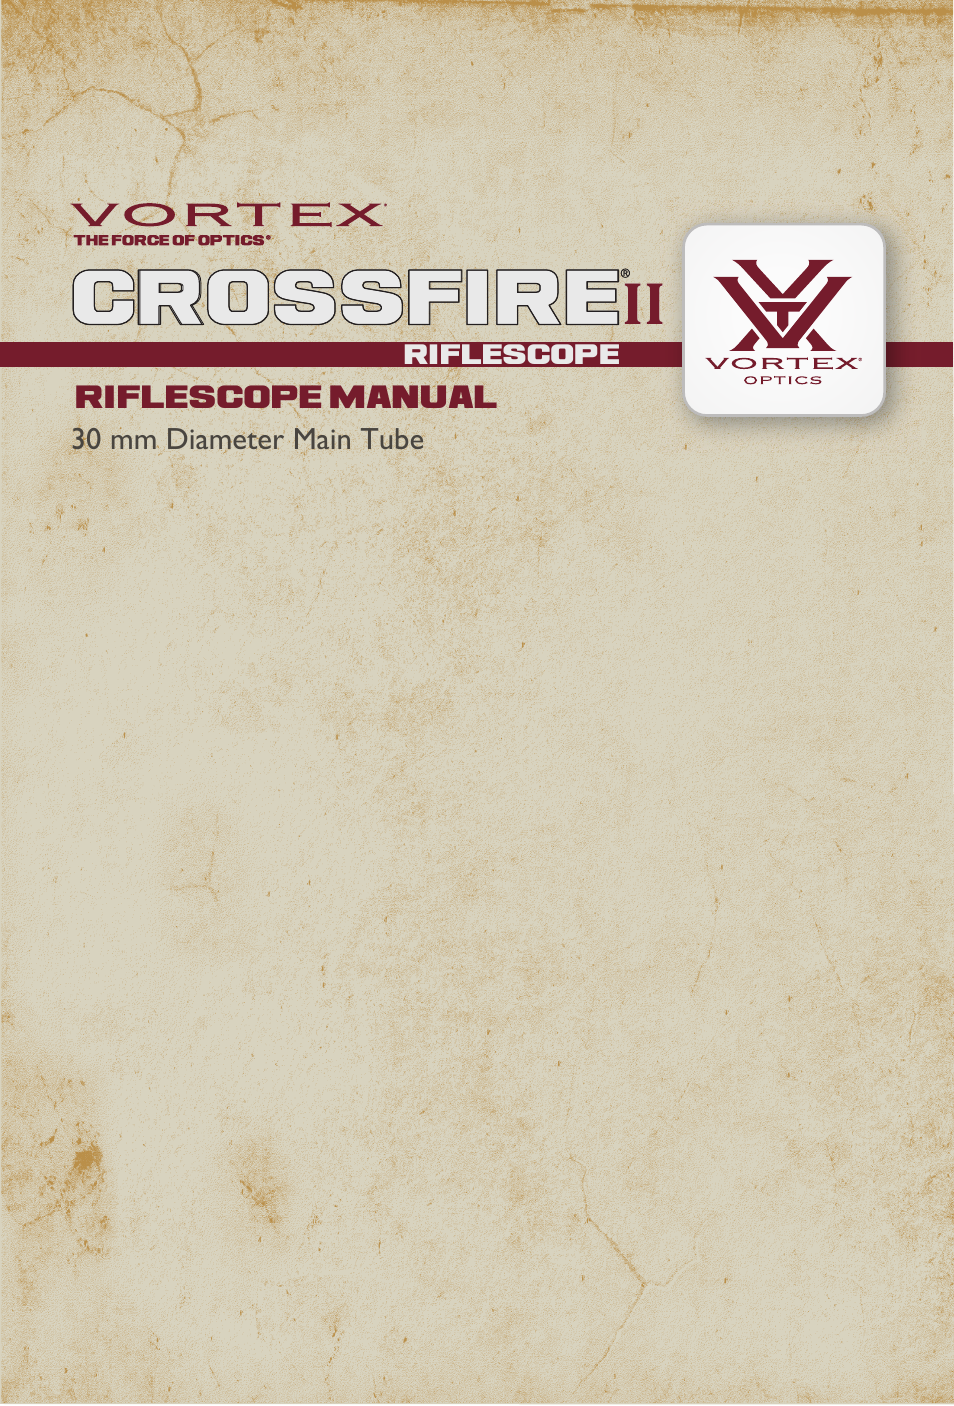 CROSSFIRE II 4-16X50 AO RIFLESCOPE